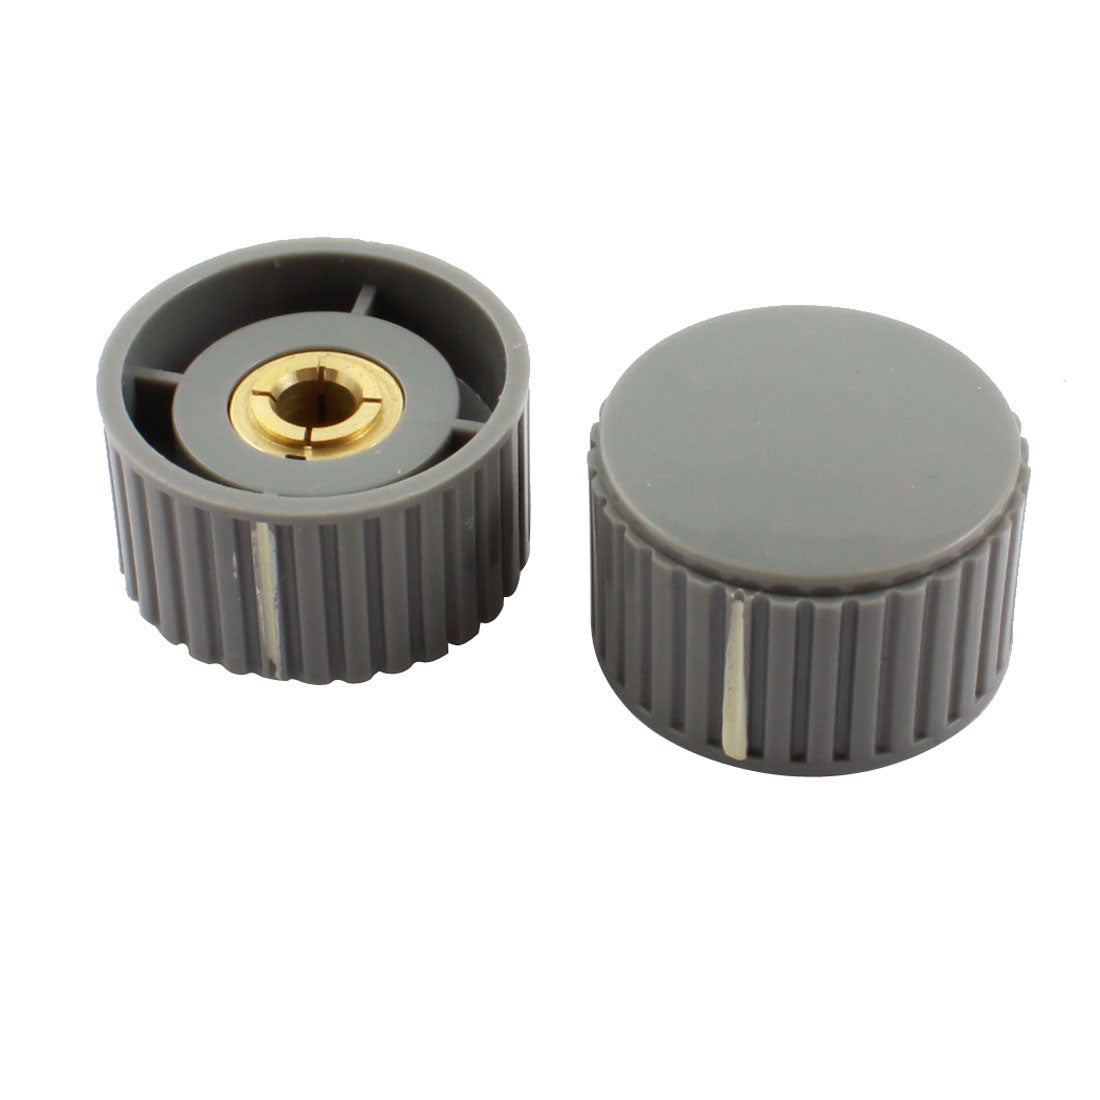 uxcell Uxcell 2 Pcs 6mm Dia Hole Gray Plastic Rotary Nonslip Volume Control Potentiometer Encoder Knob Cap 32mm